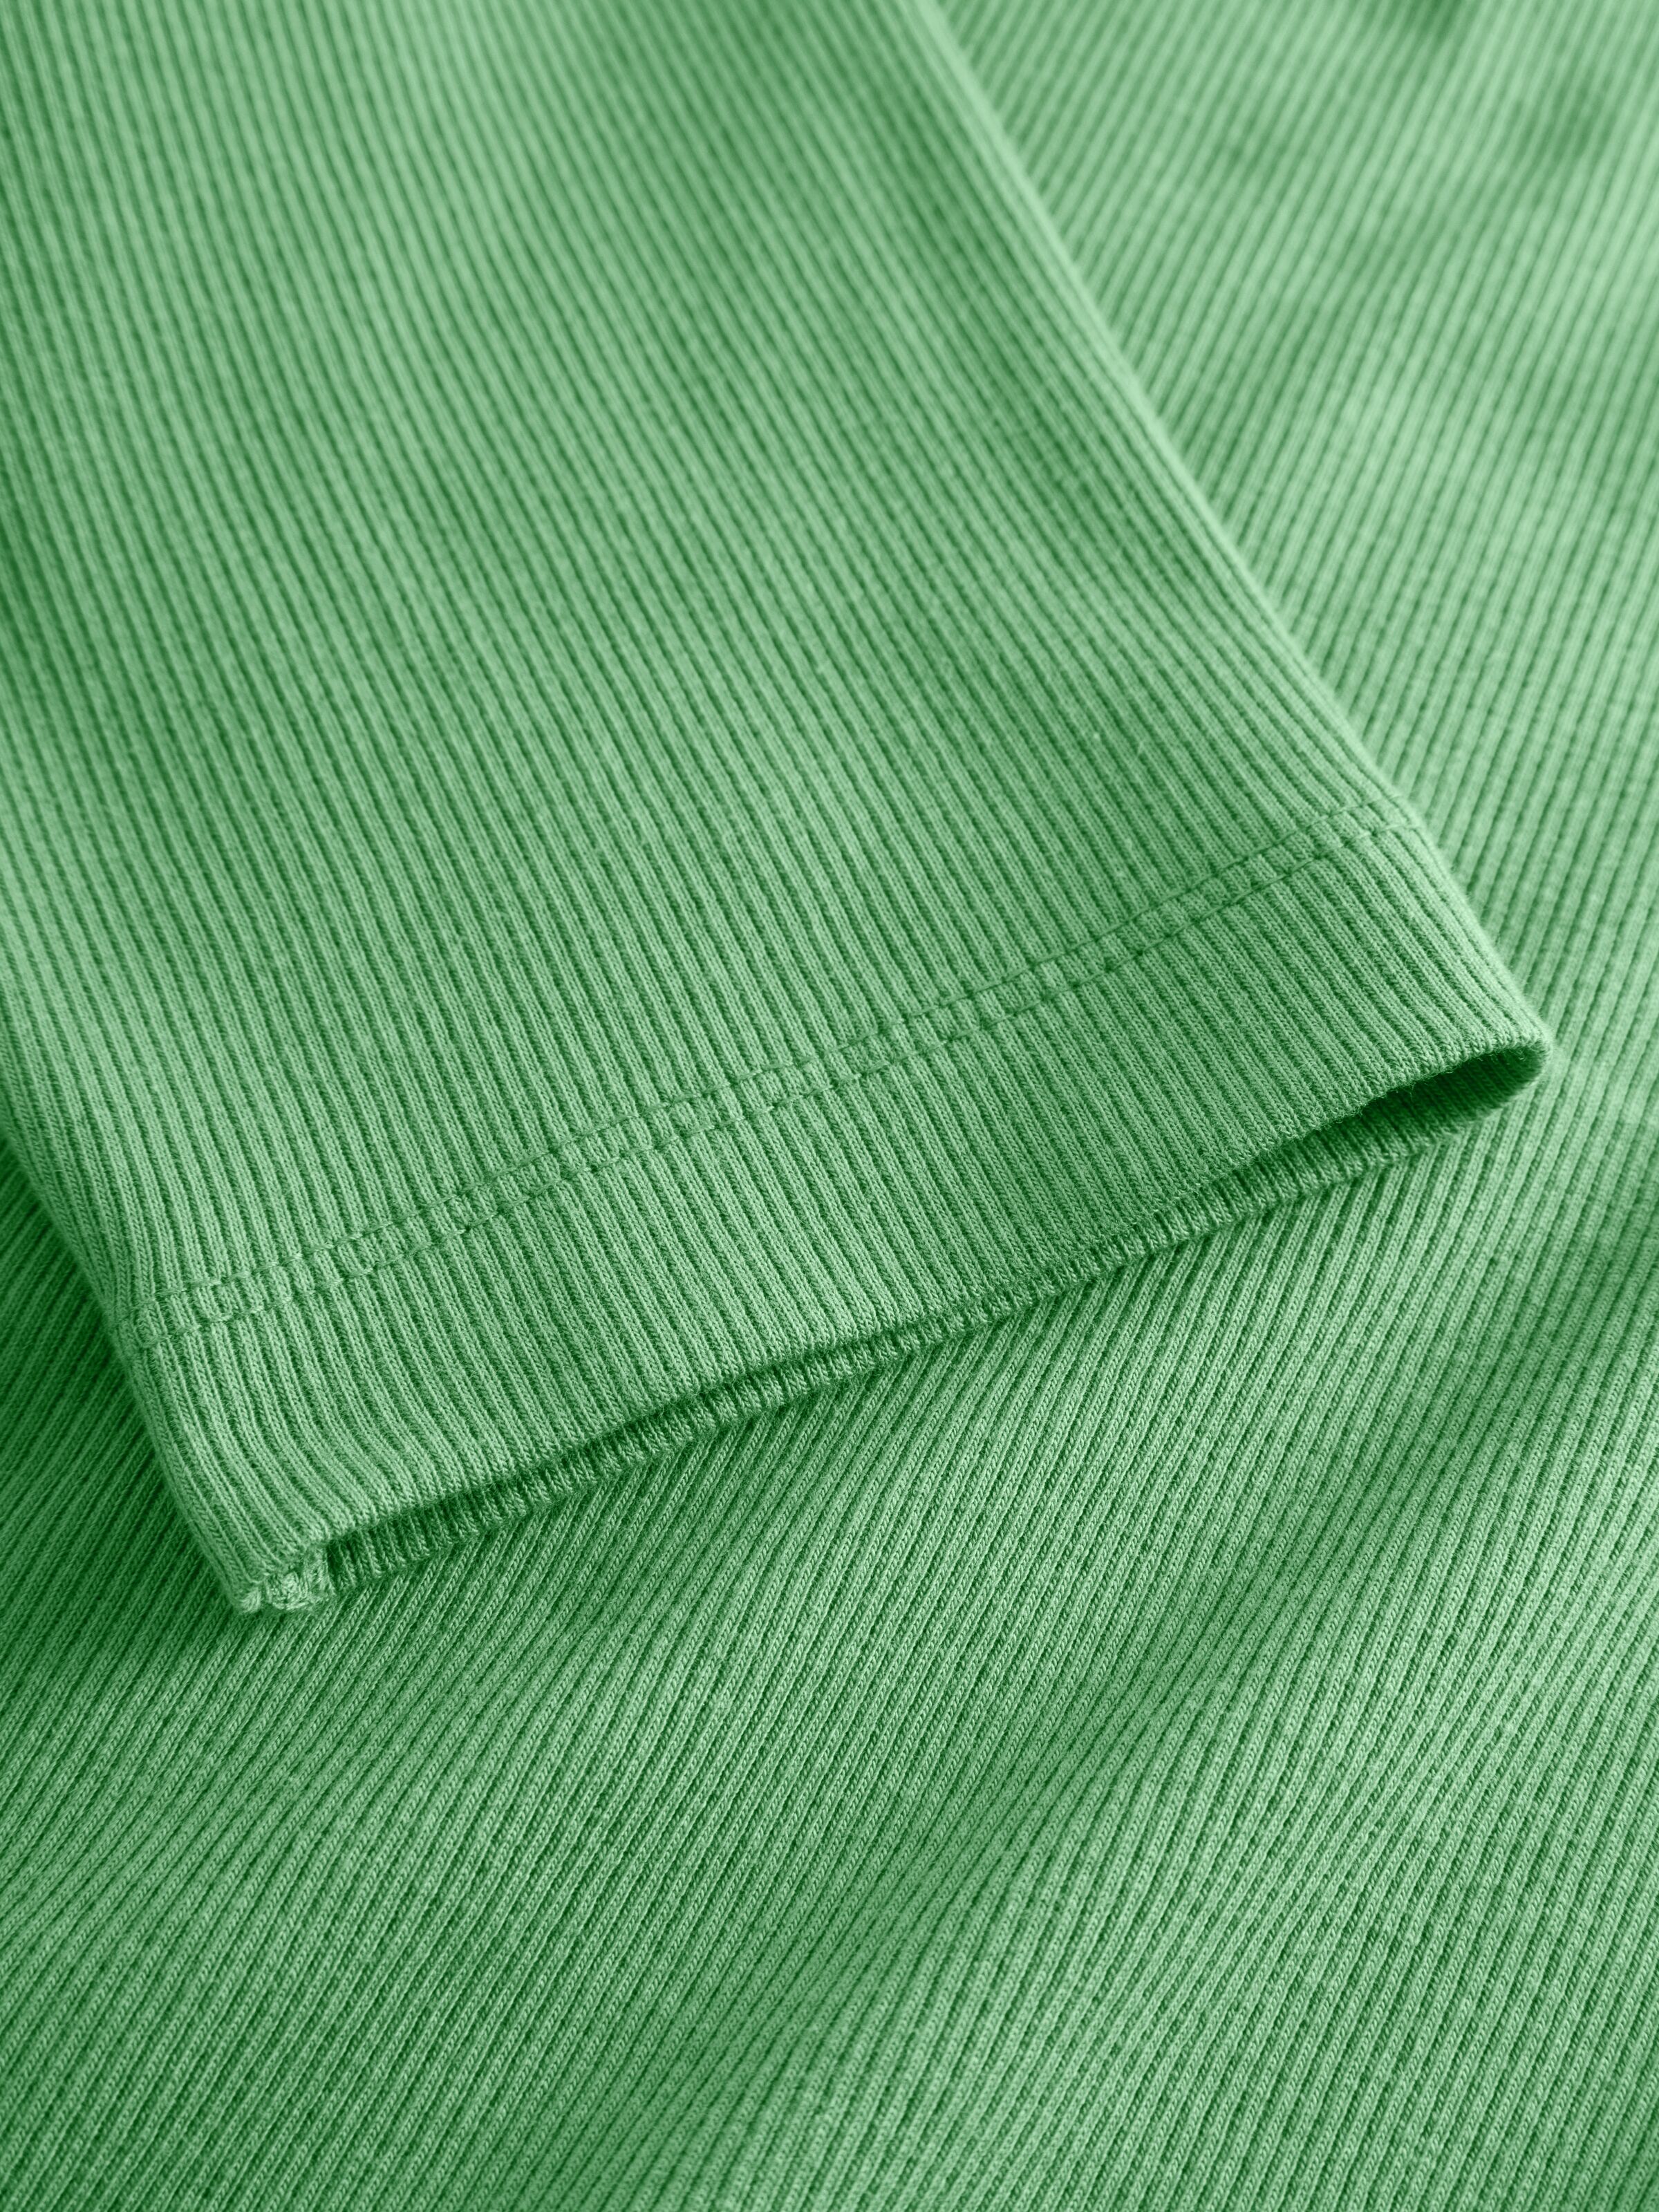 T-Shirt Rib Shale Green